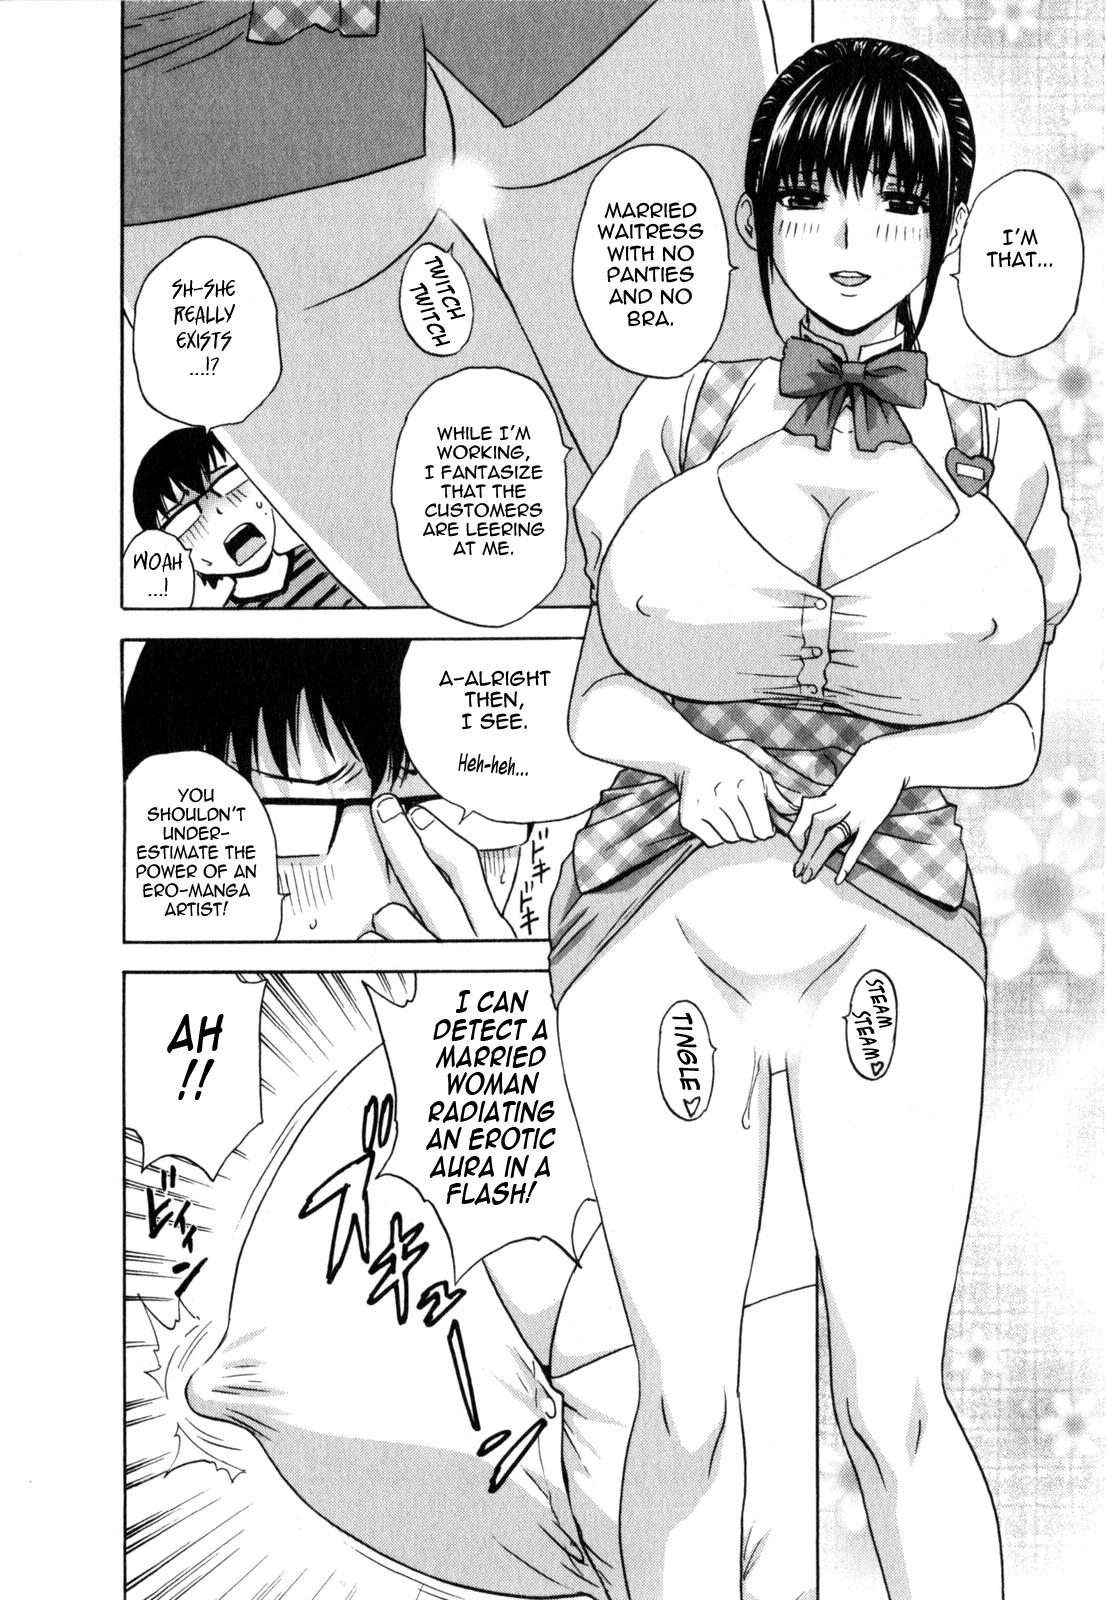 [Hidemaru] Life with Married Women Just Like a Manga 2 - Ch. 1-6 [English] {Tadanohito} 114